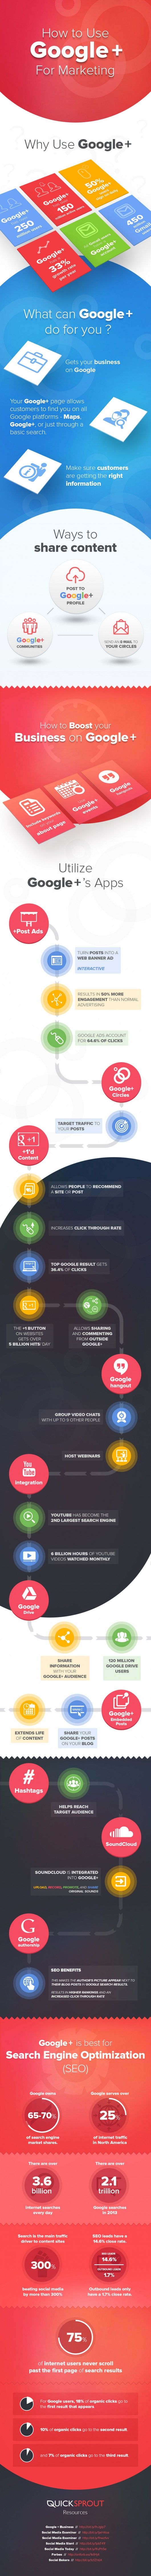 Google+ Marketing Tipps